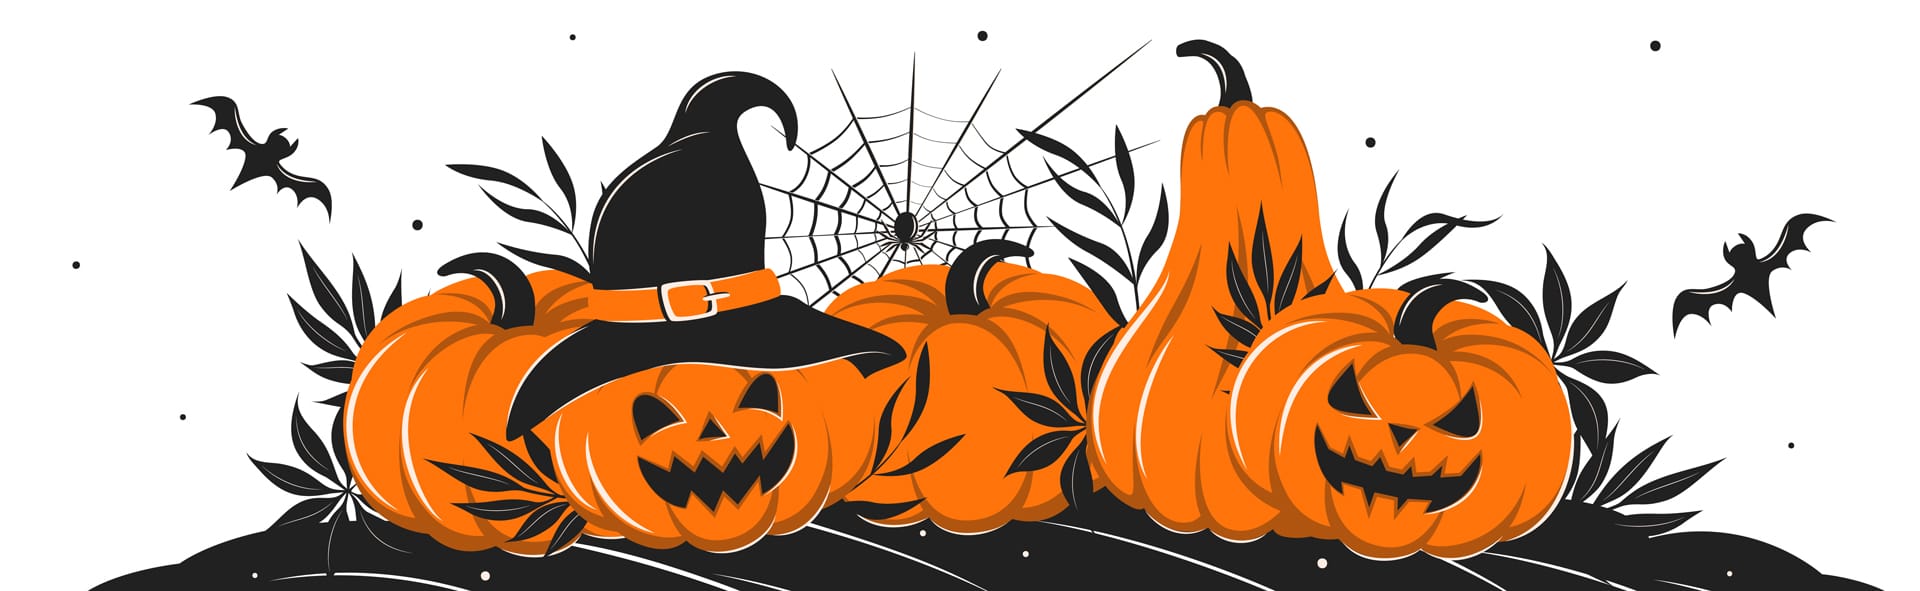 Happy halloween banner with pumpkins cobwebs spider bat image thanksgiving clip art free